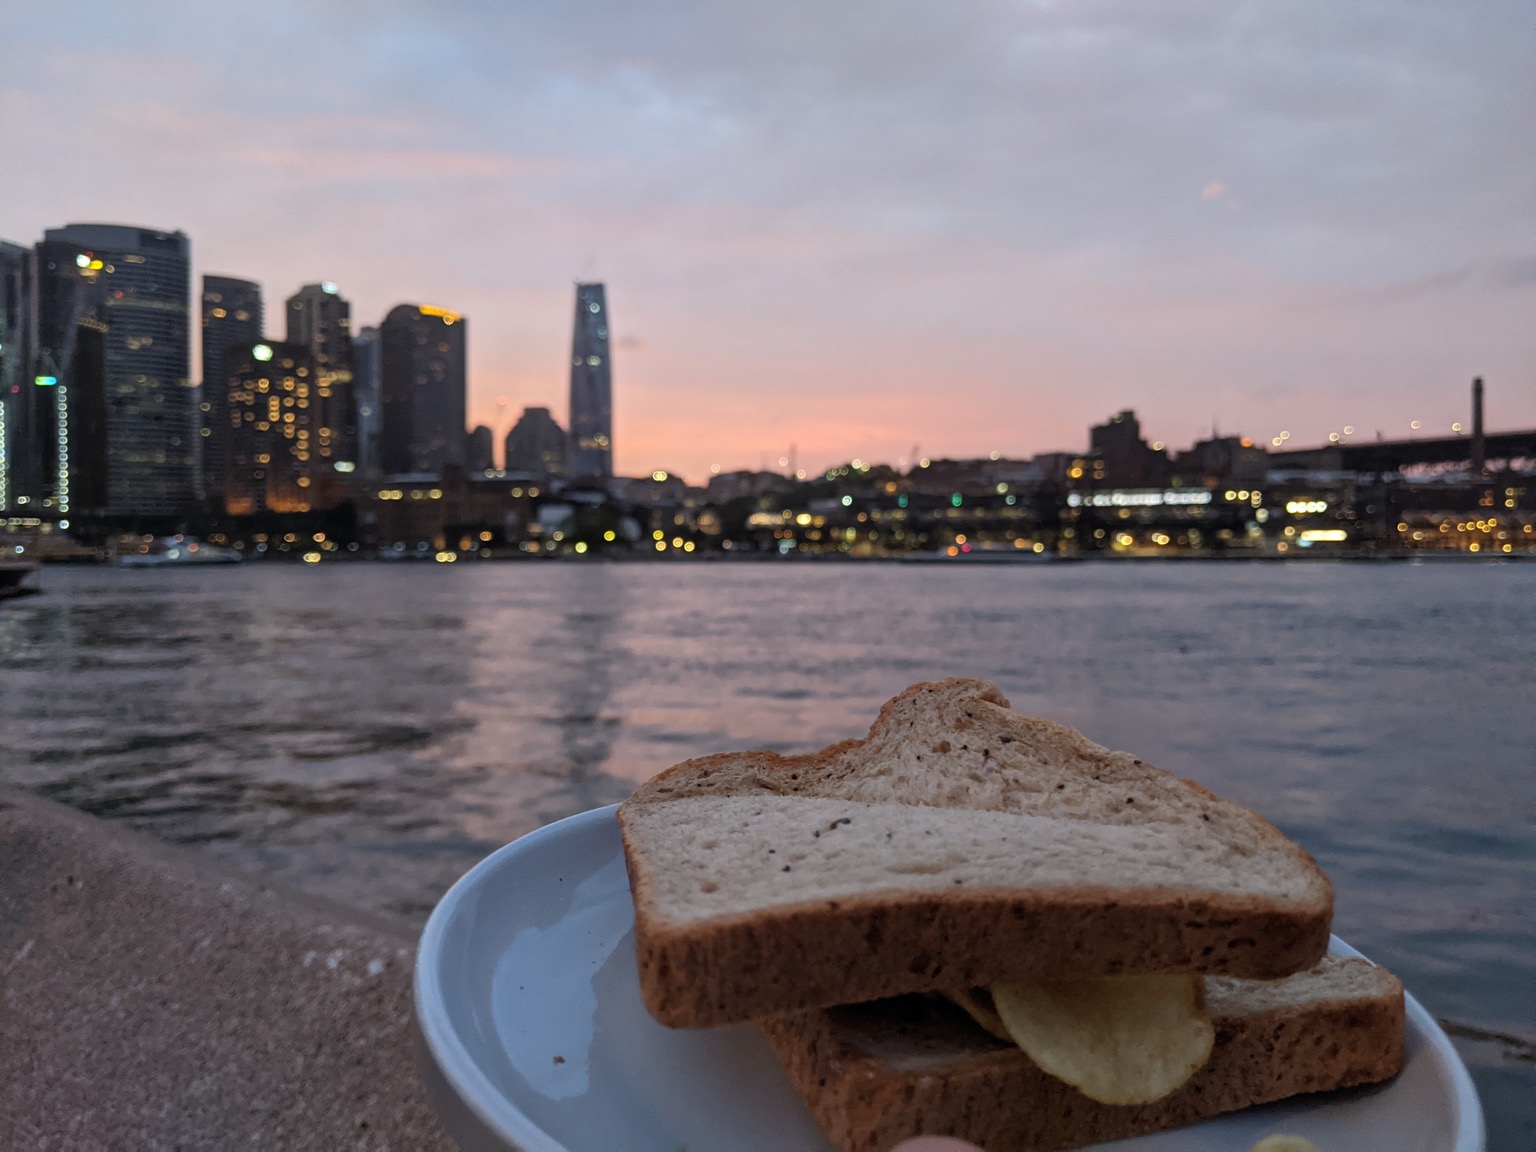 Sydney in the evening as backdrop to a crisp sandwich